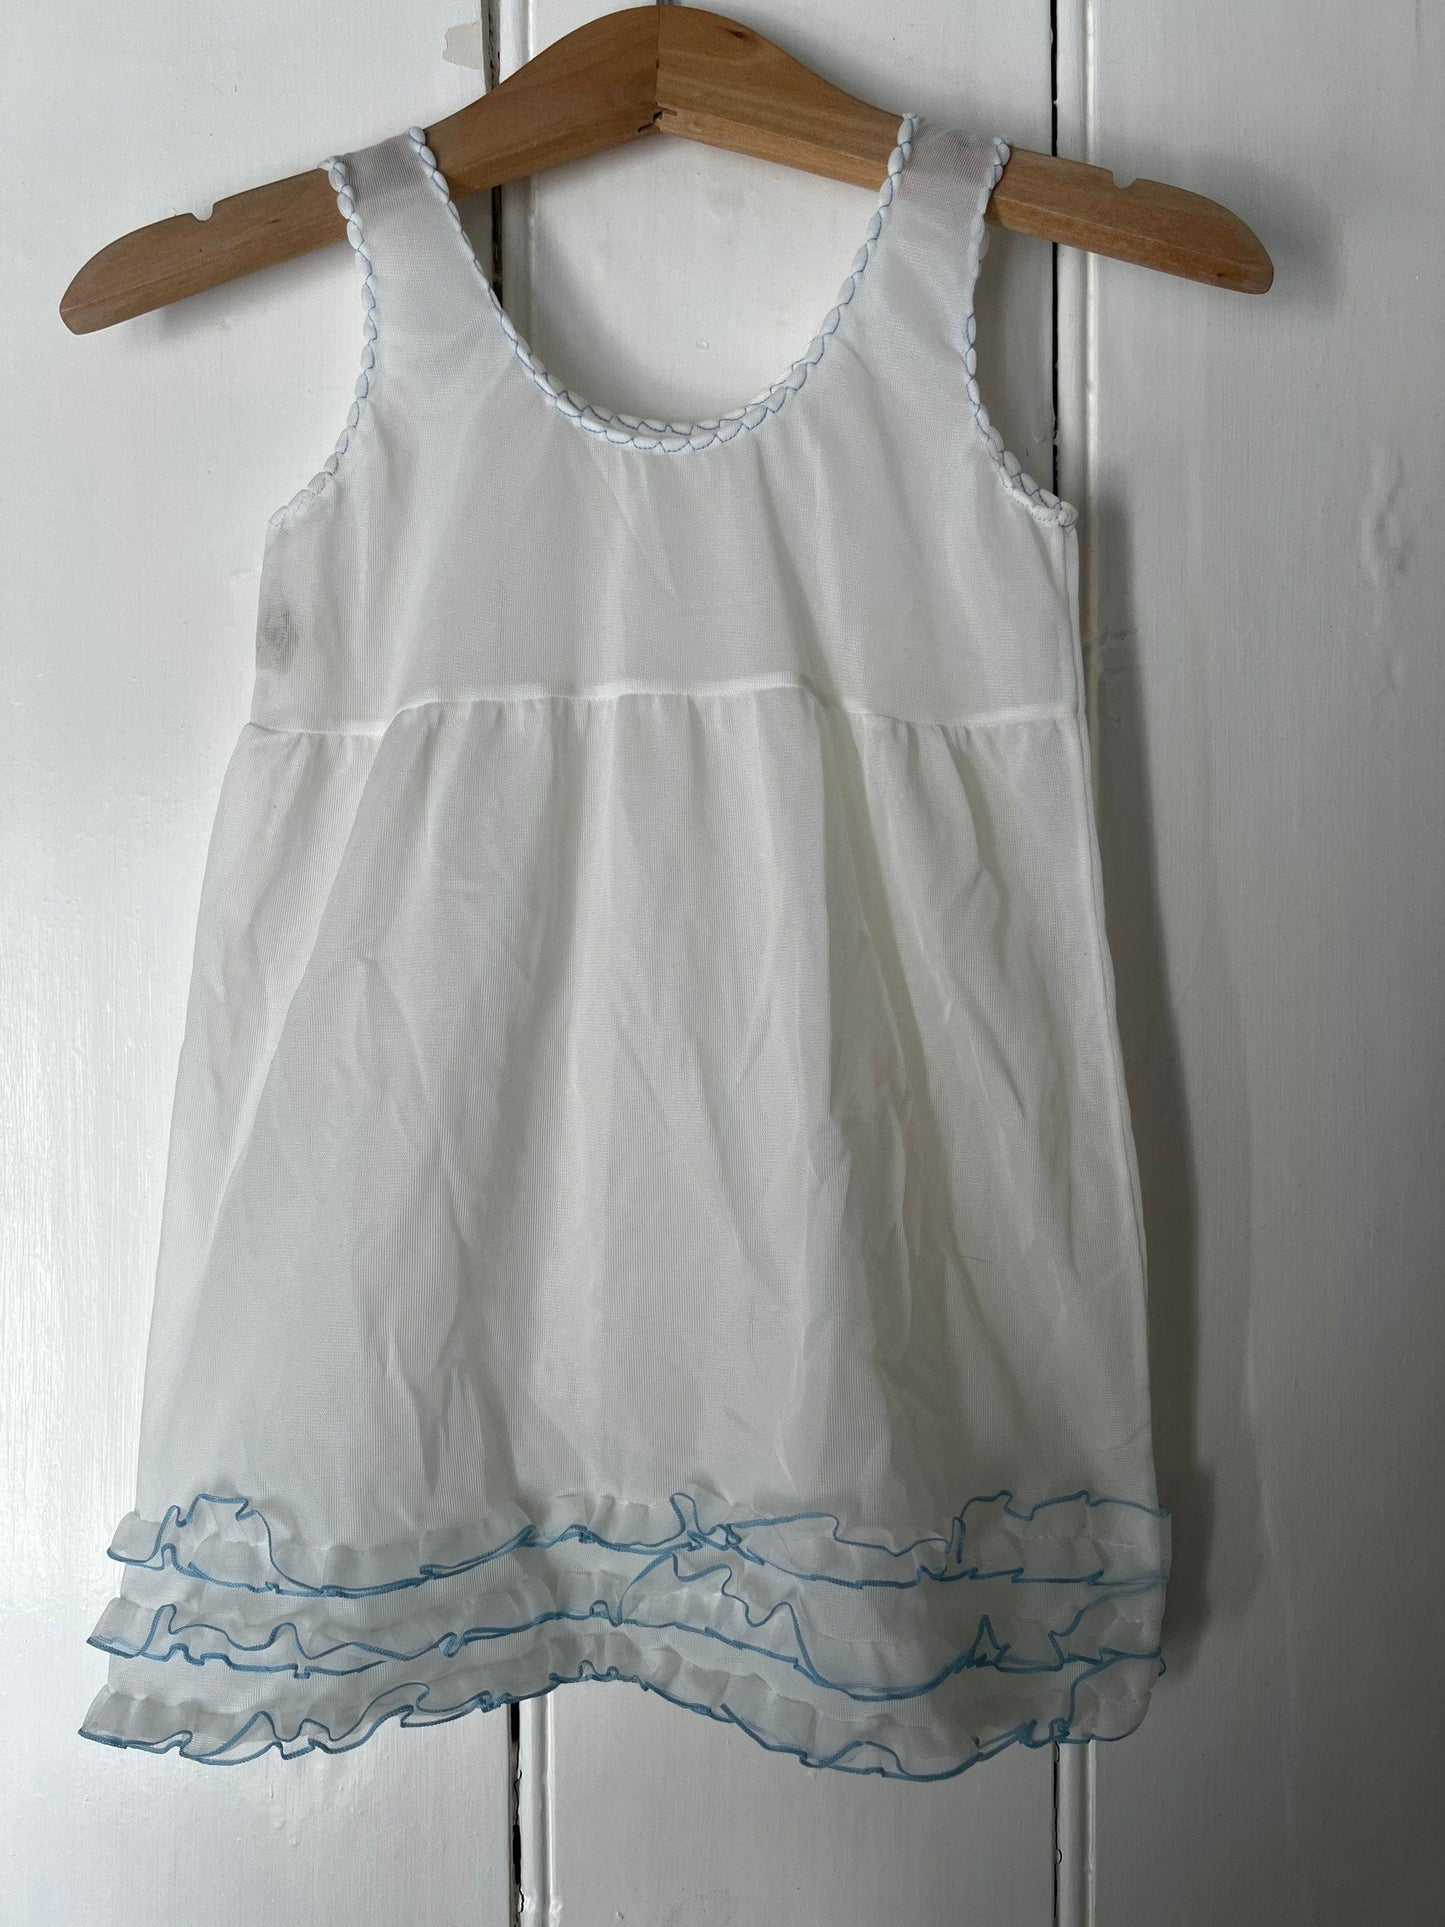 Vintage Girls Dress - white and blue nylon Dress Baby Dress age 2-3 years